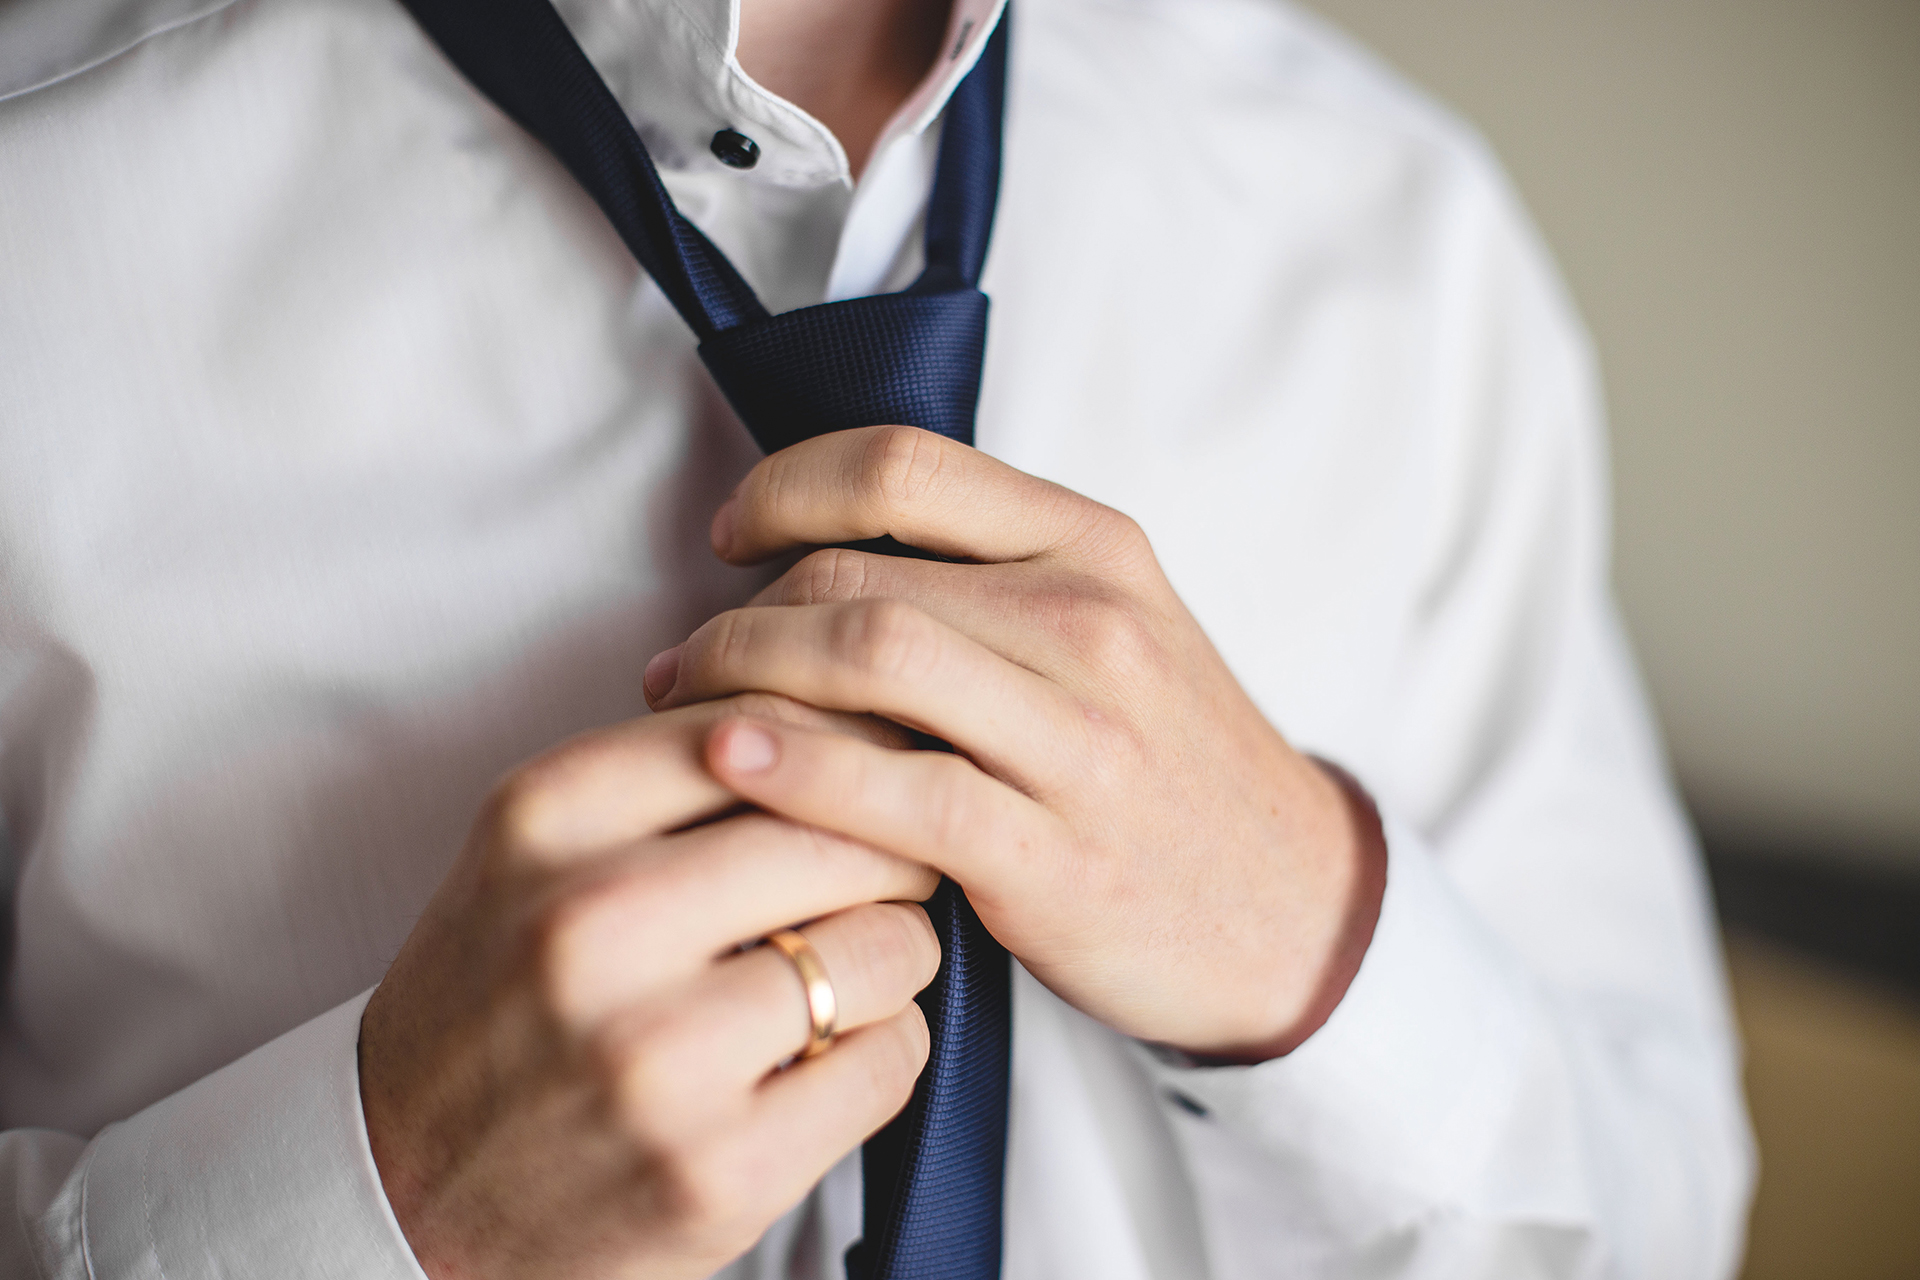 How to tie a necktie